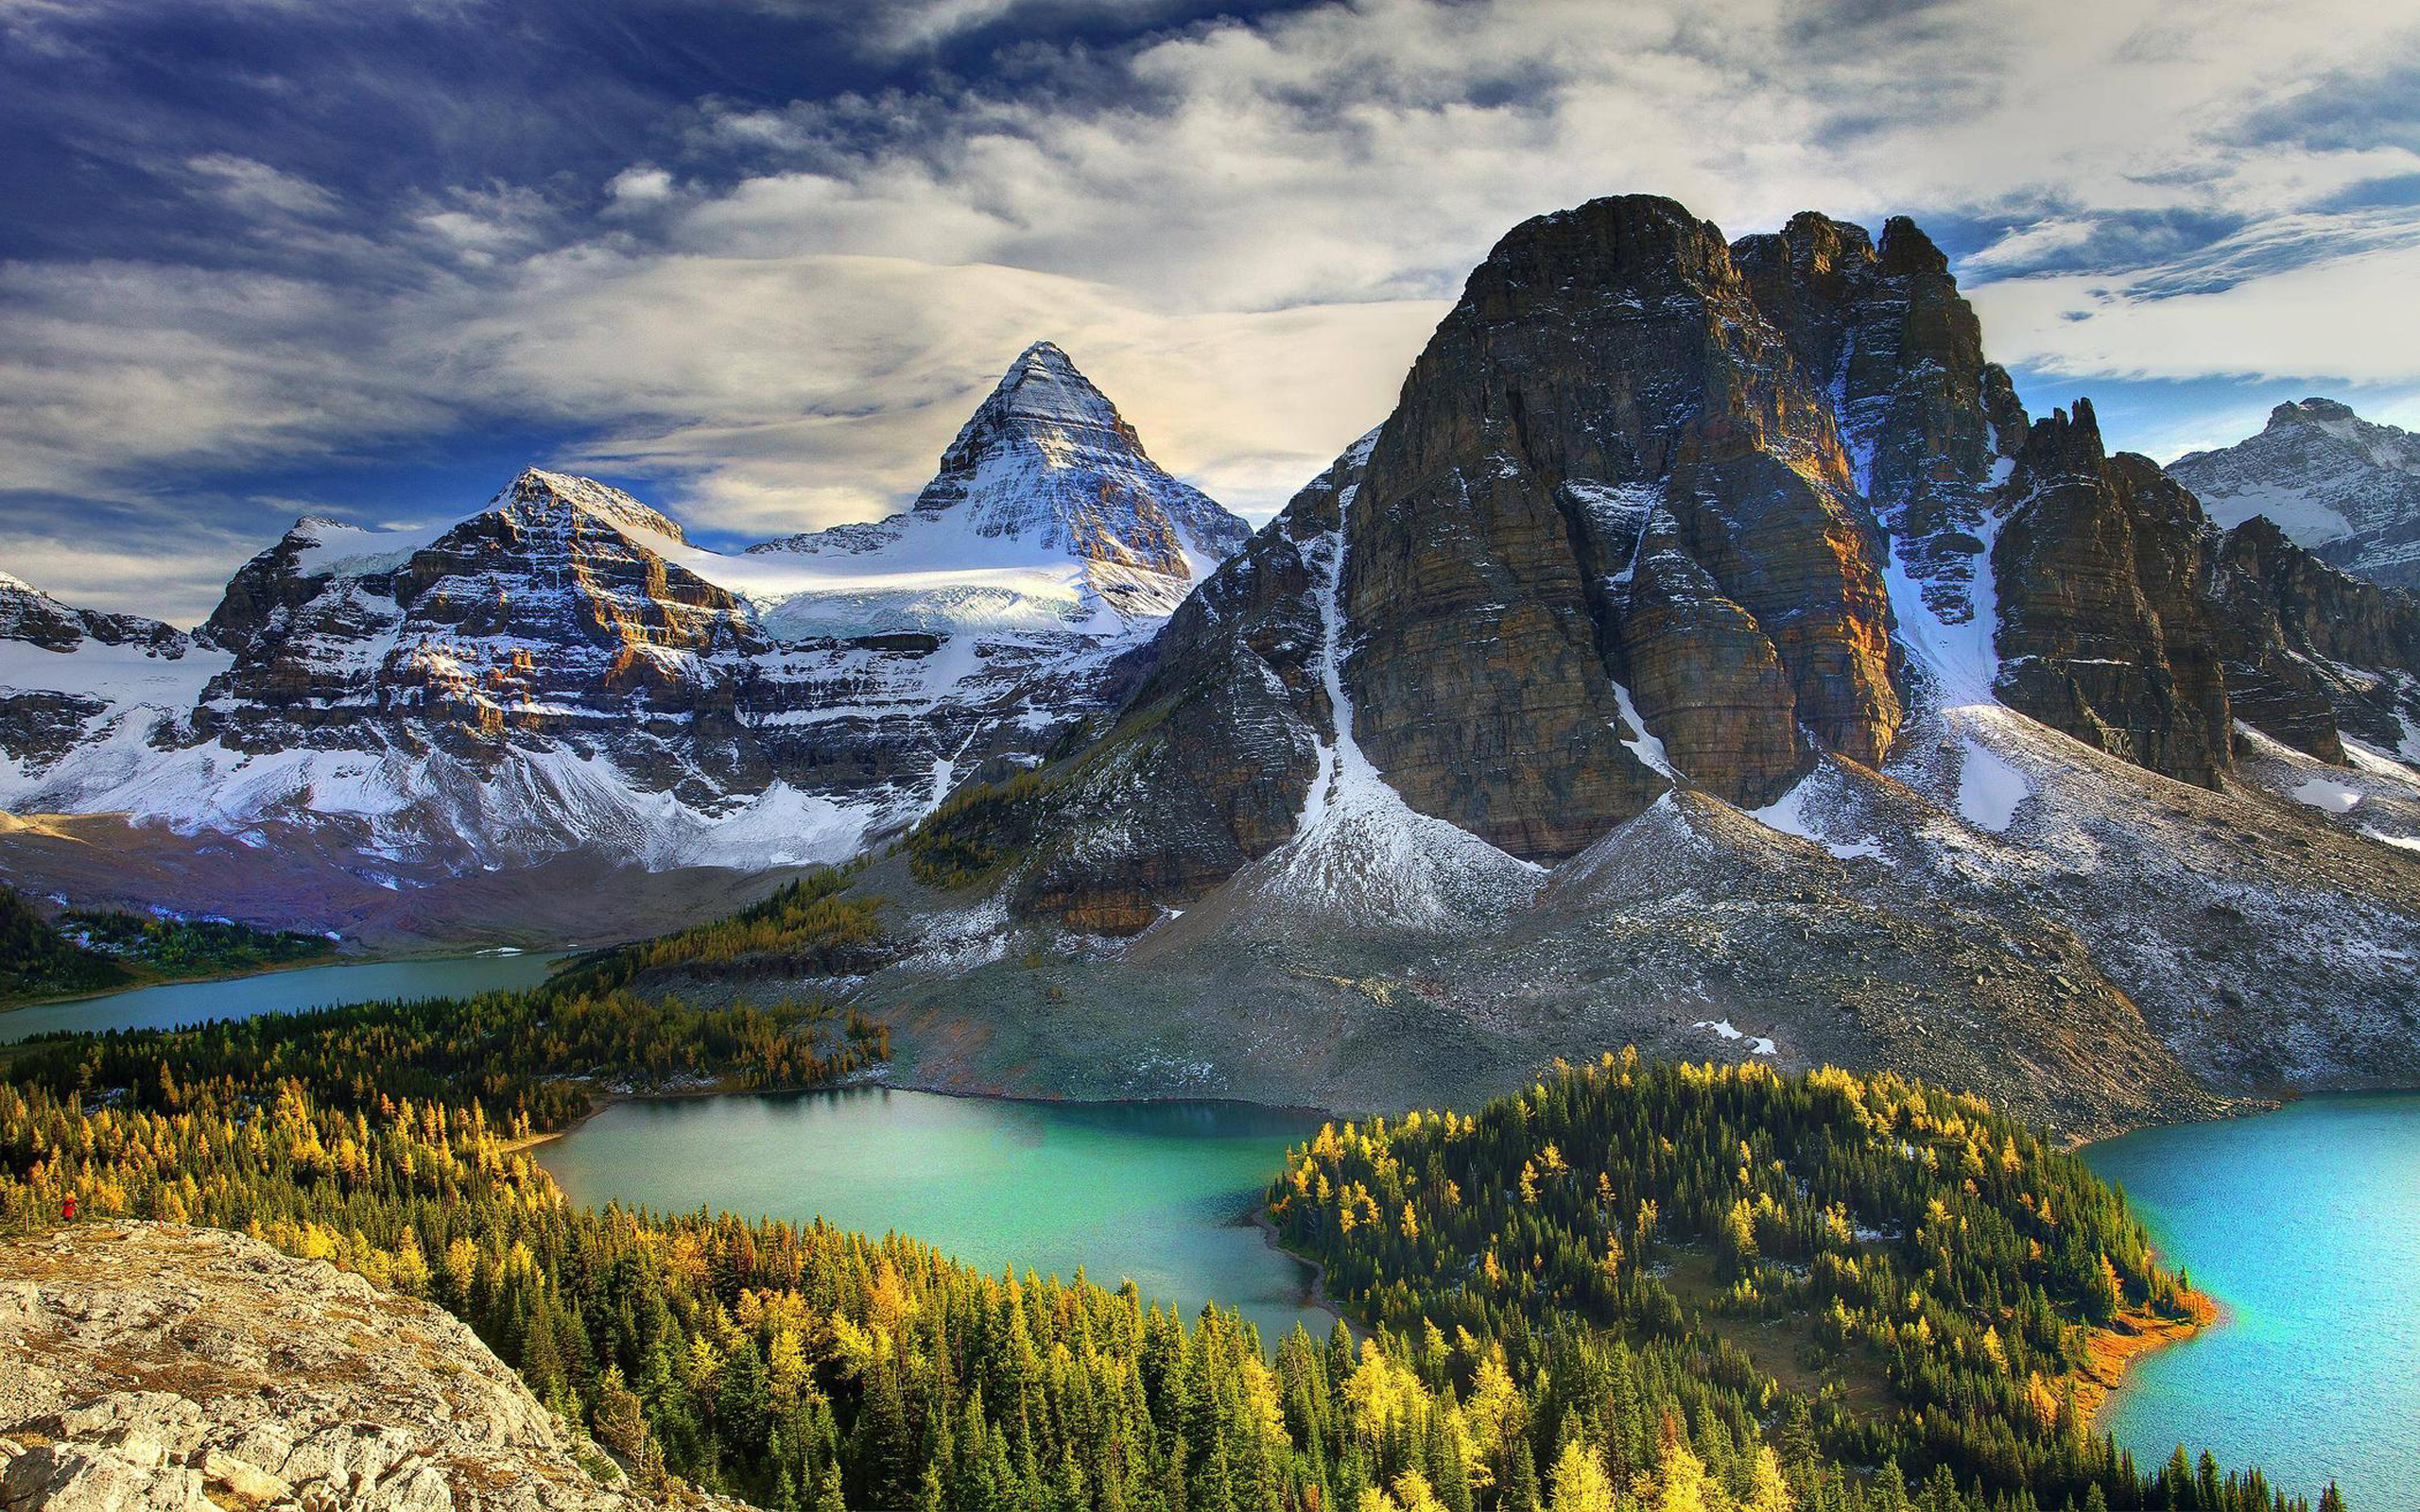 The mountains in are beautiful. Фотограф Кевин МАКНИЛ Kevin MCNEAL. Ассинибойн, Британская Колумбия, Канада. Гора Ассинибойн в Канаде. Пейзаж горы.